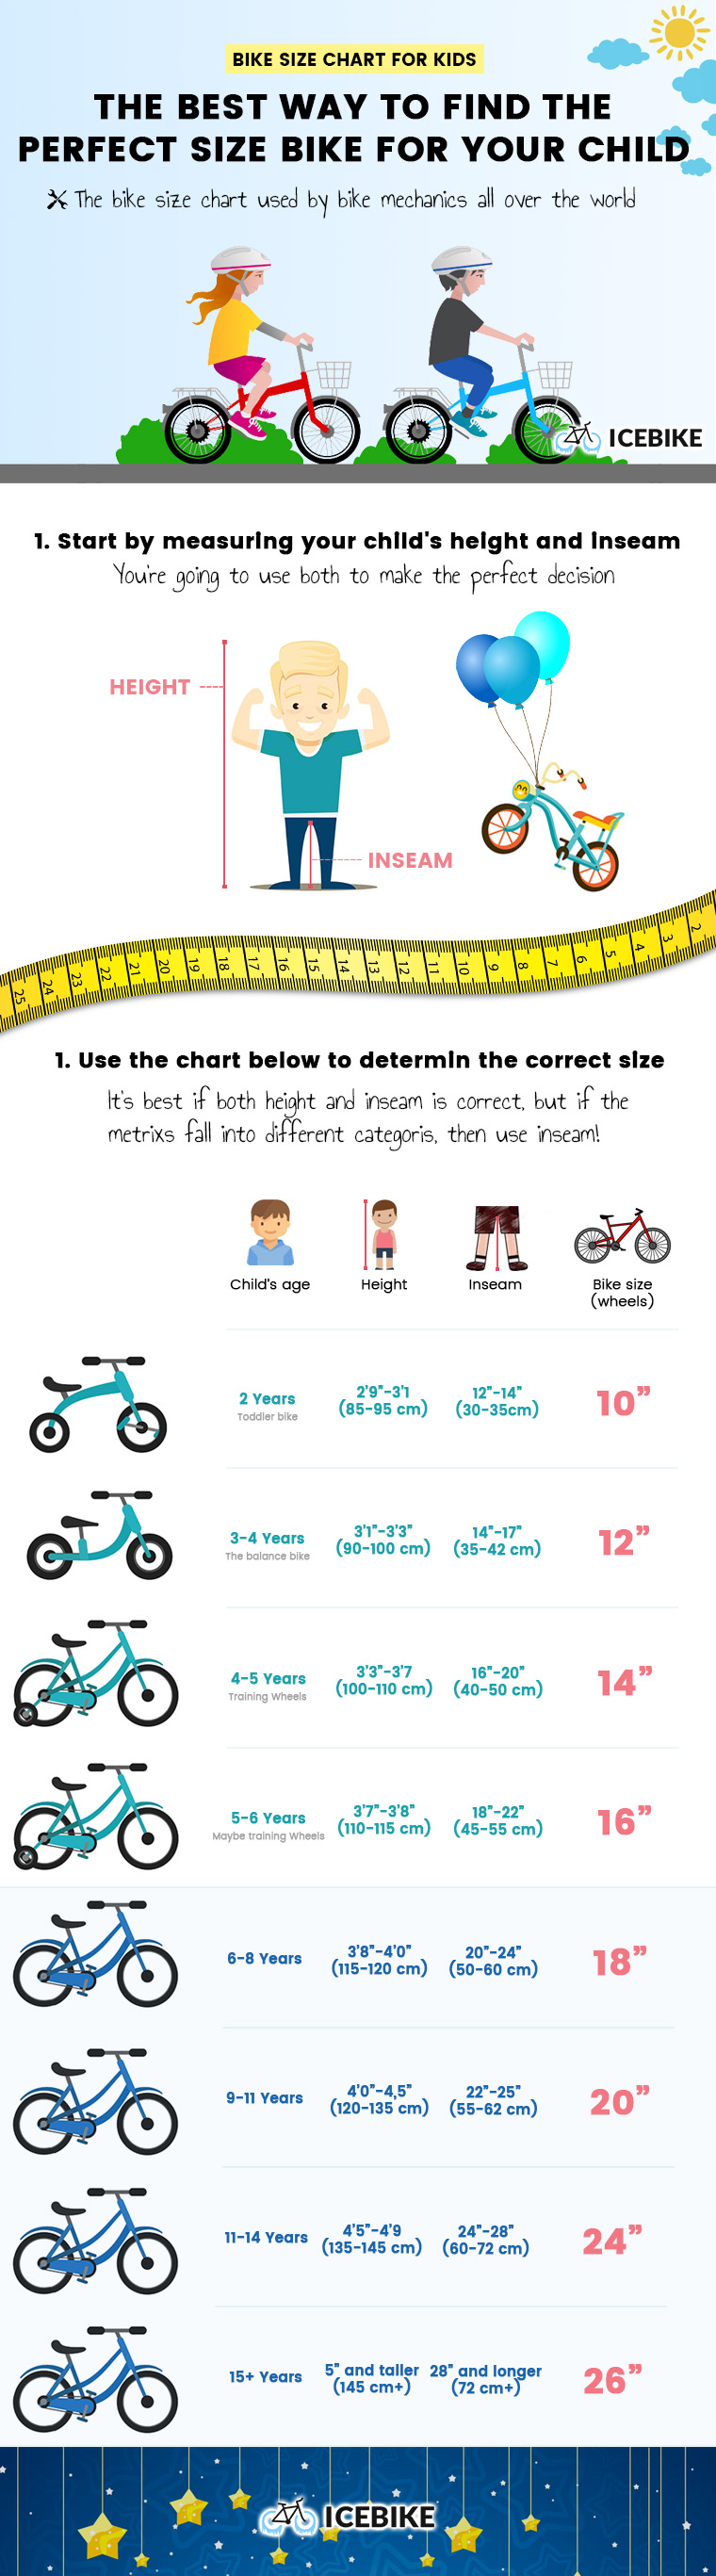 Kids Bike Size Chart: The Definitive 